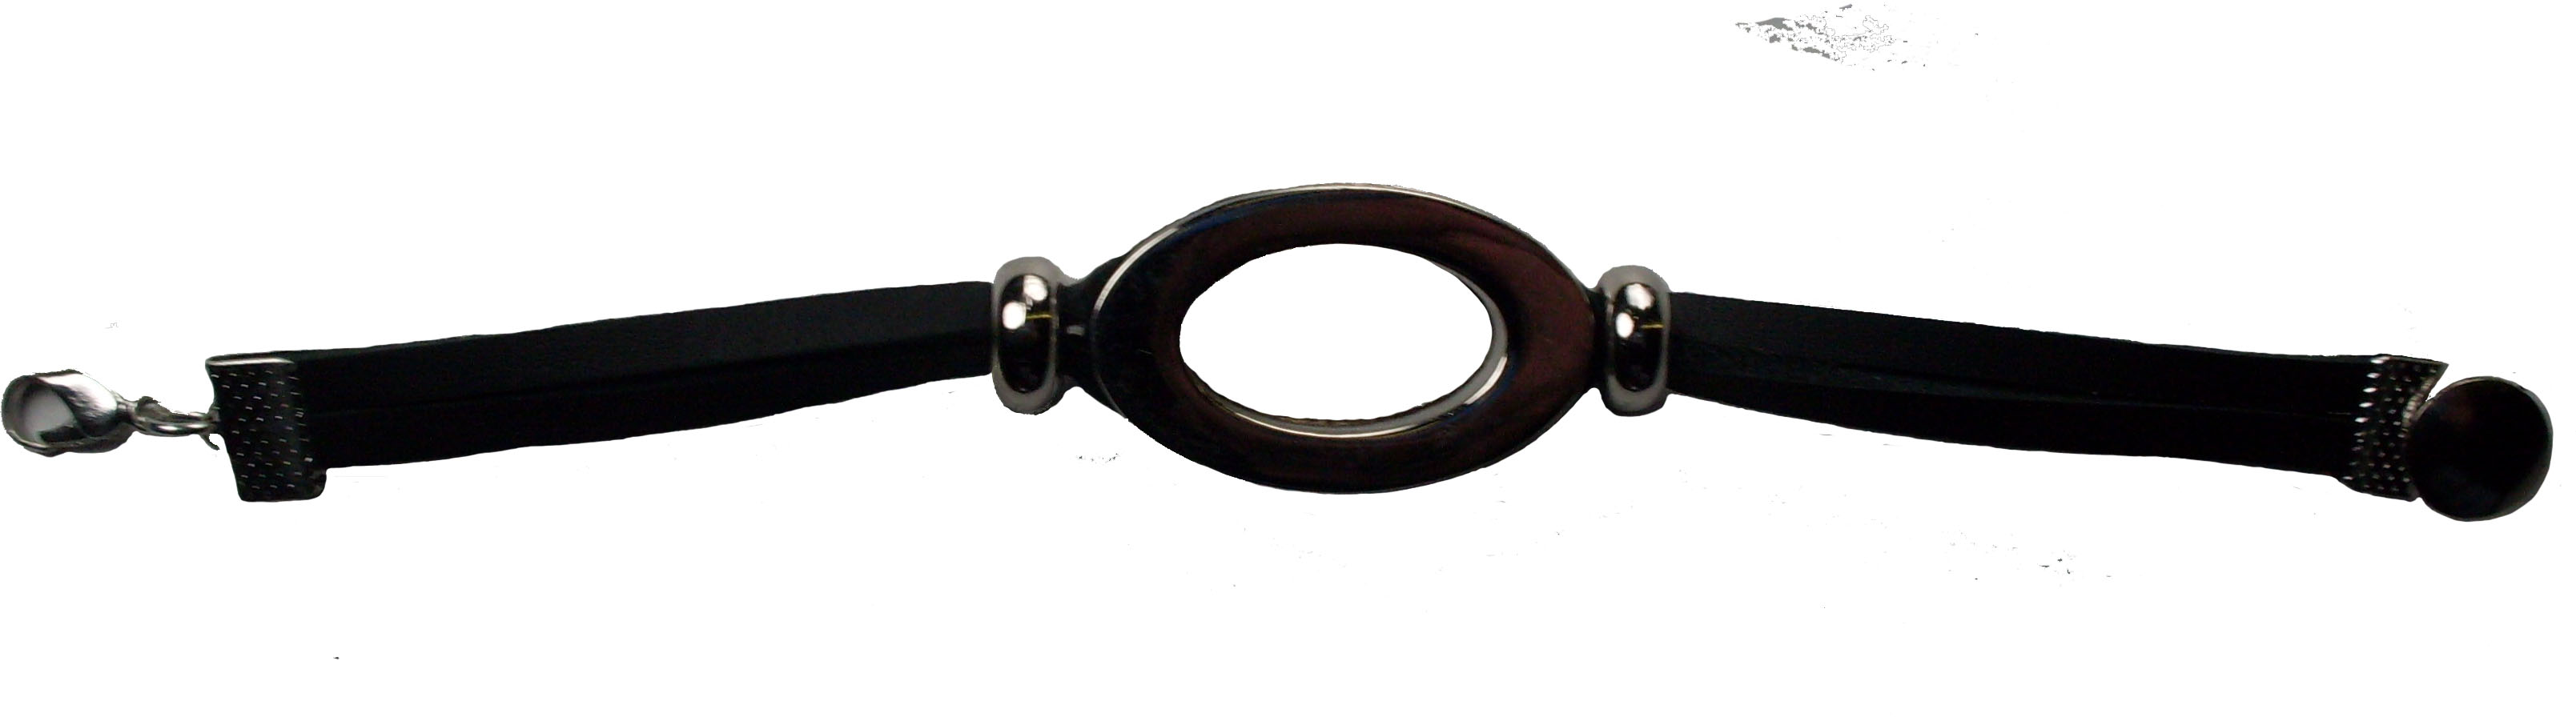 Suede with Metal Pendent Bracelet #2